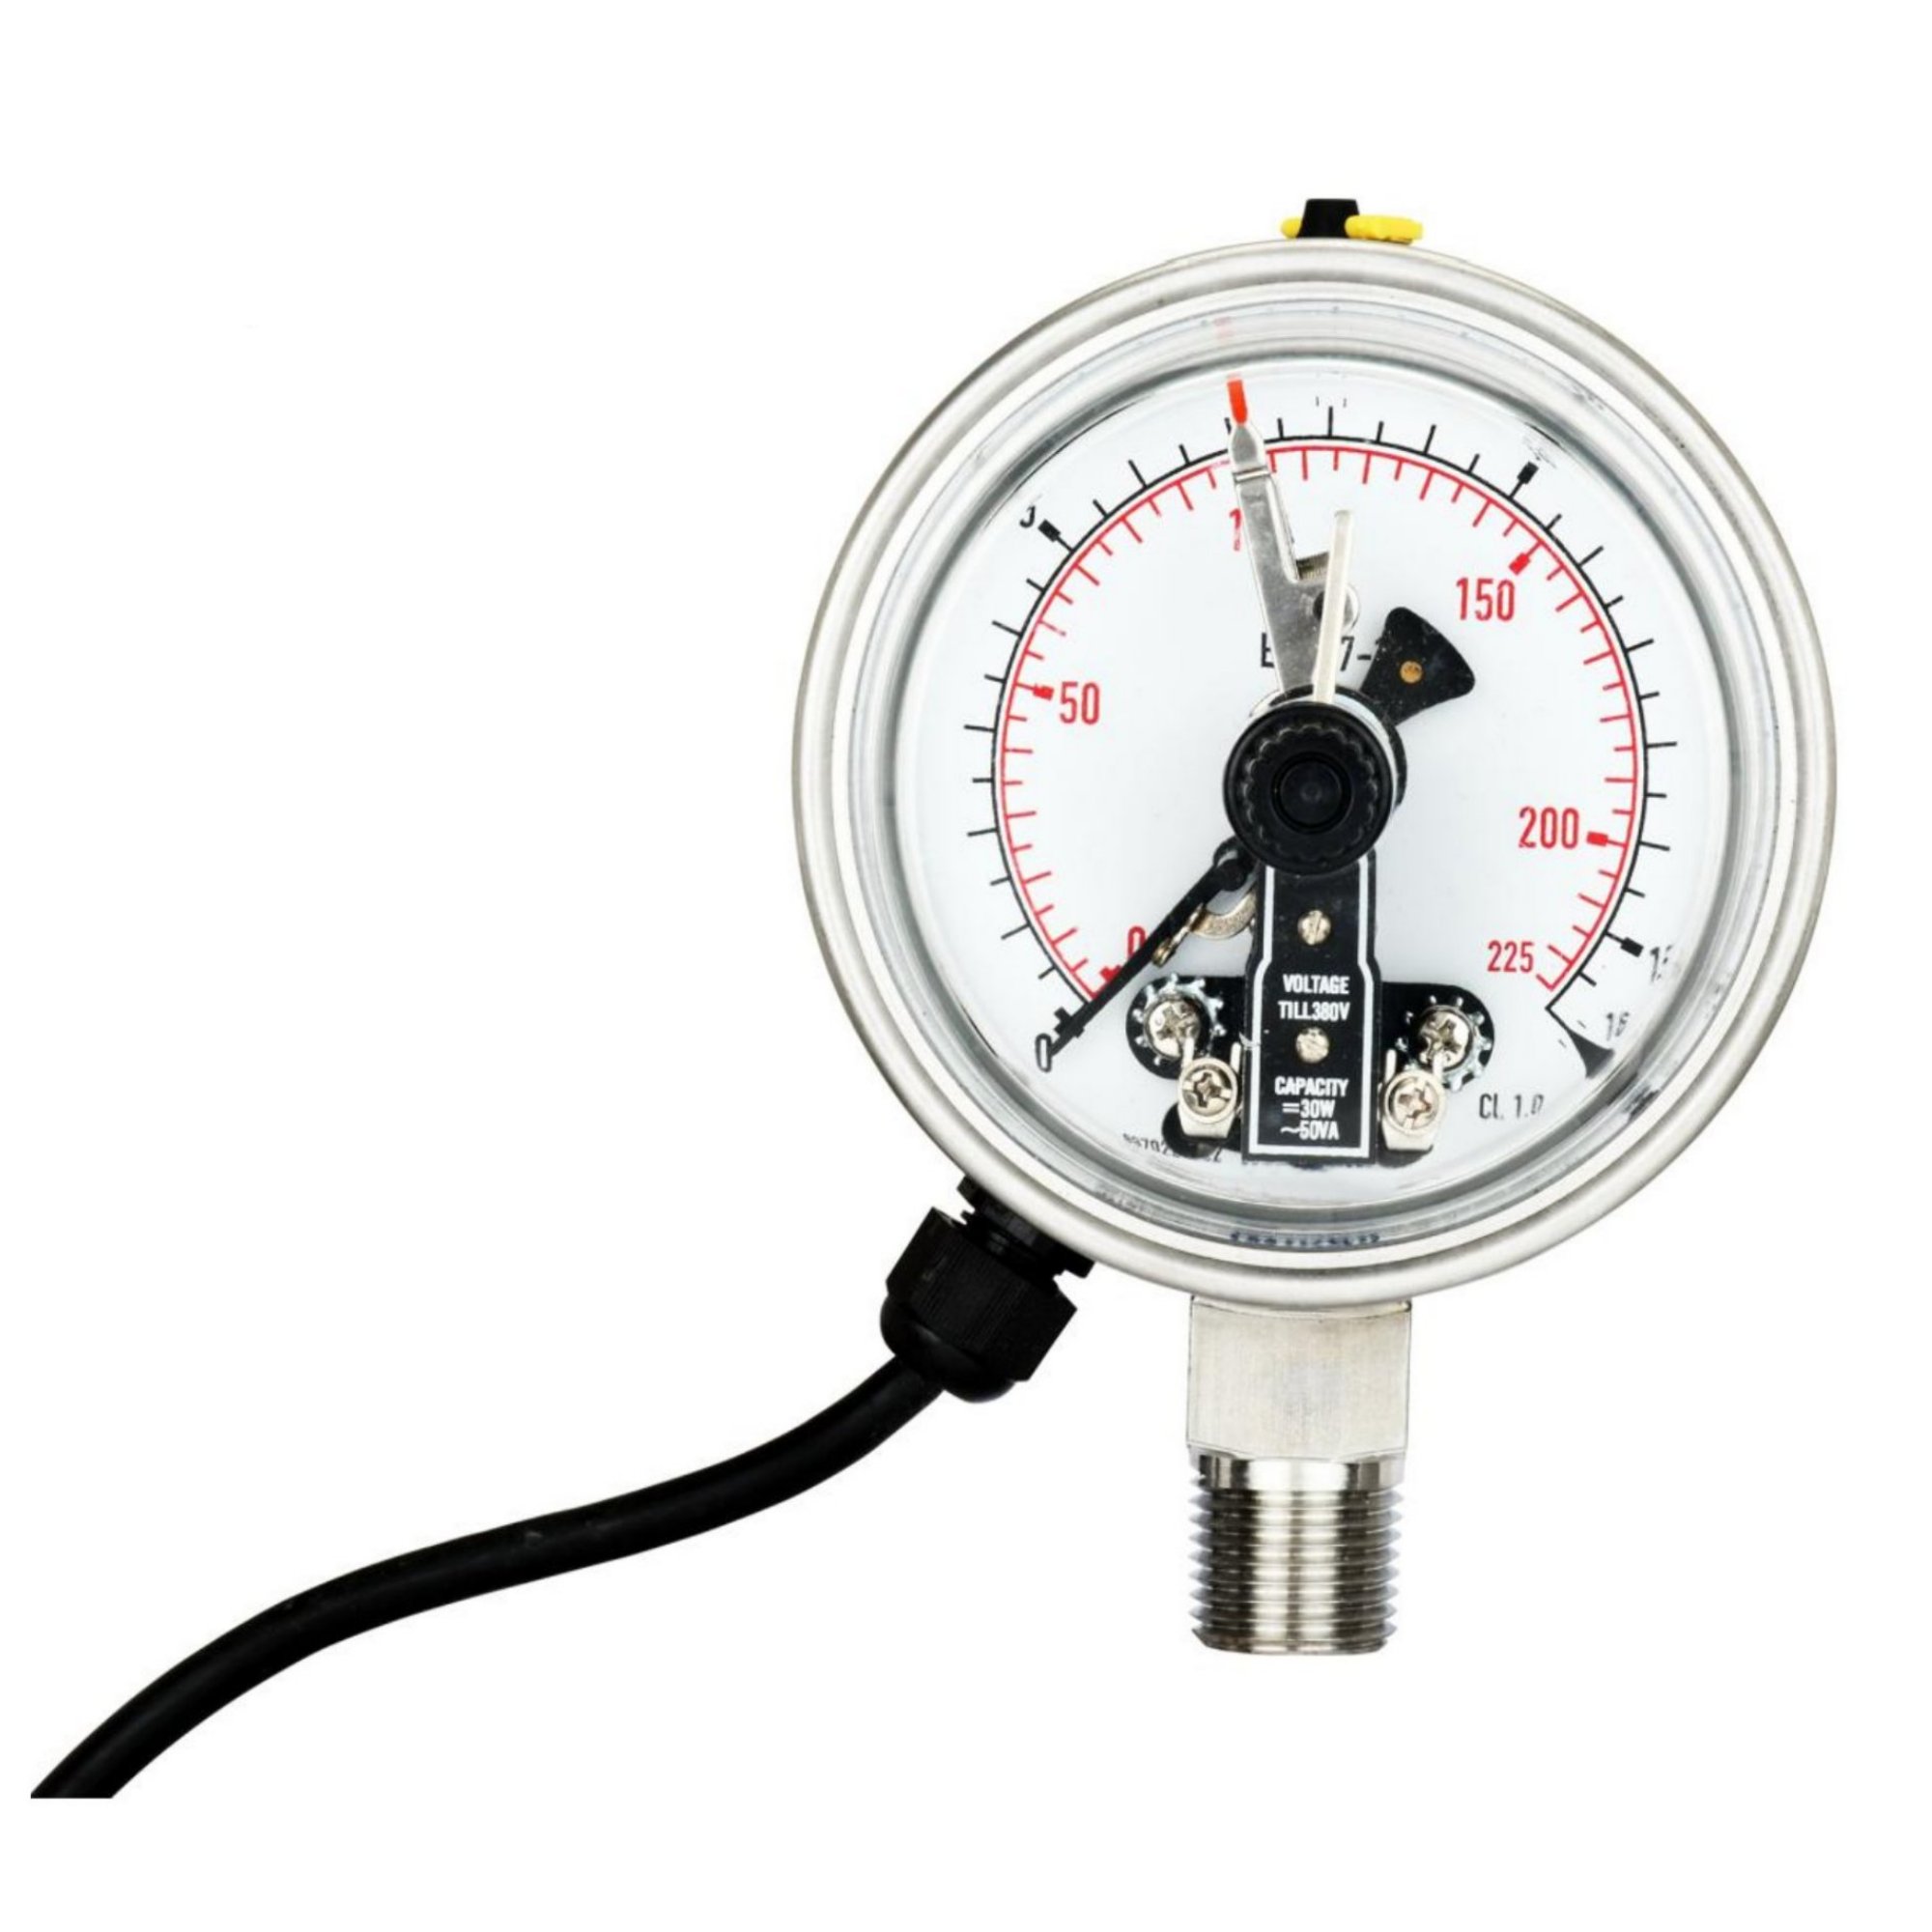 Electric contact pressure gauge, P200 SERIES